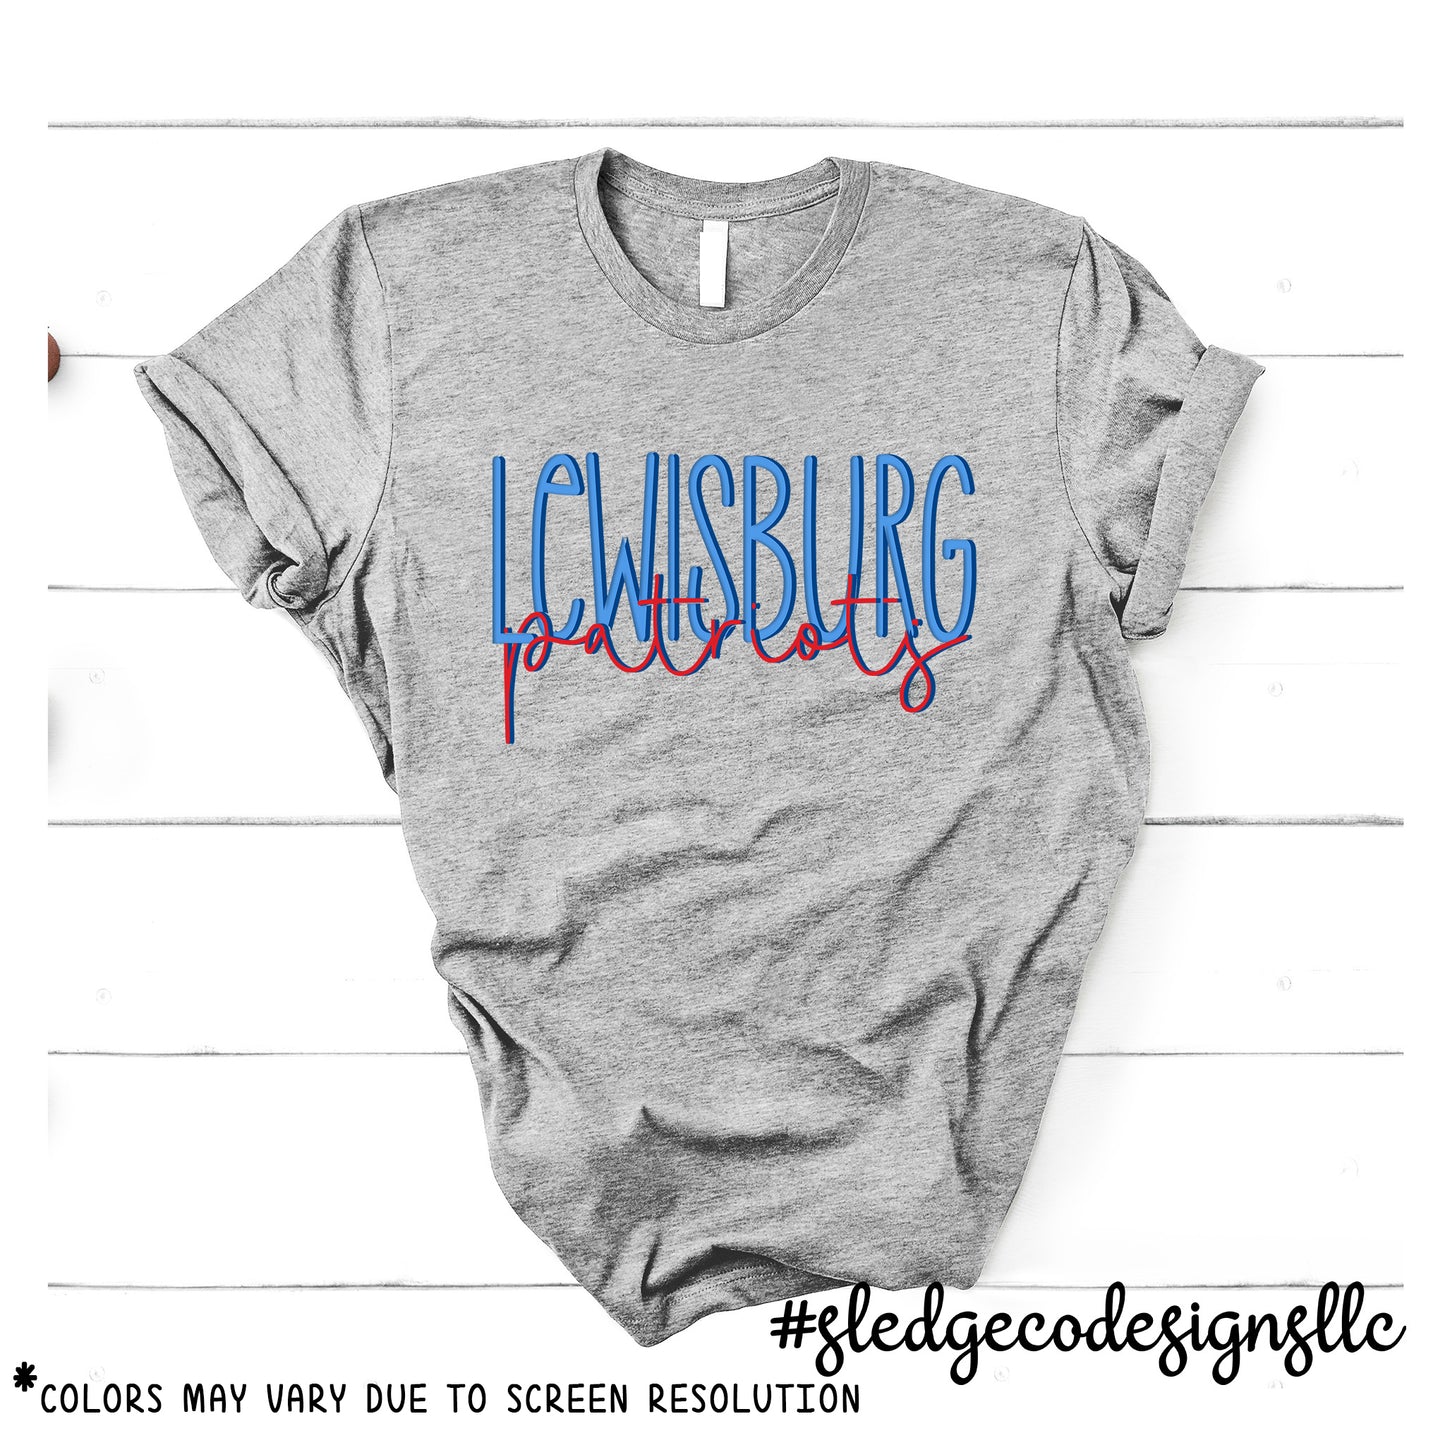 LEWISBURG Patriots DUO | Pats EXCLUSIVE |  UNISEX Custom Tshirt